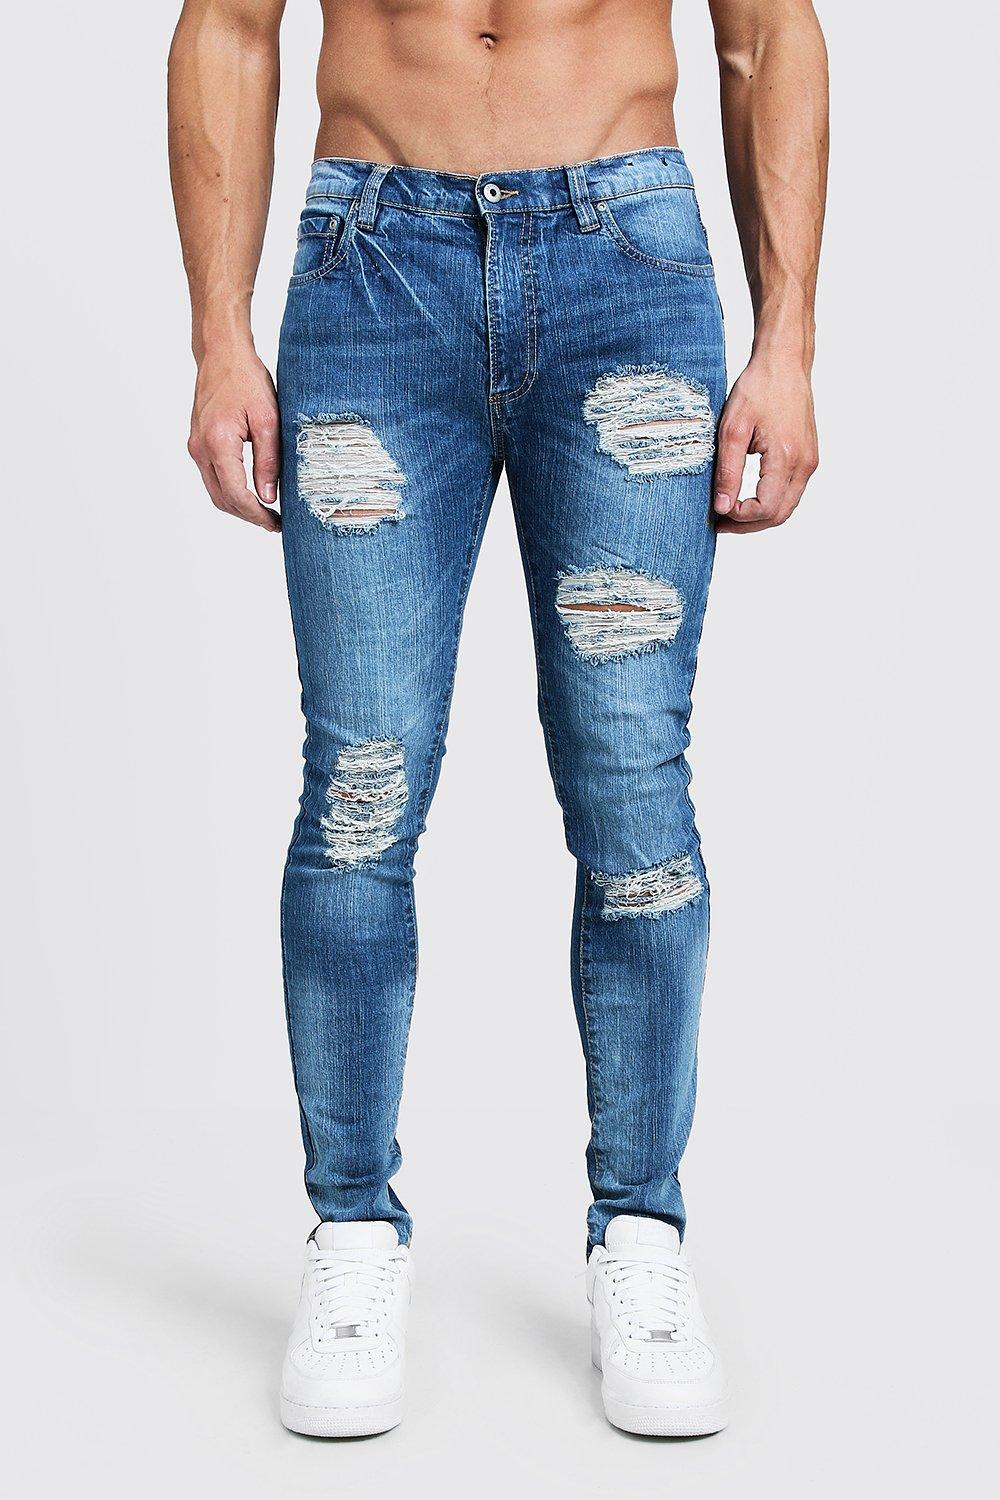 amiri jeans neiman marcus